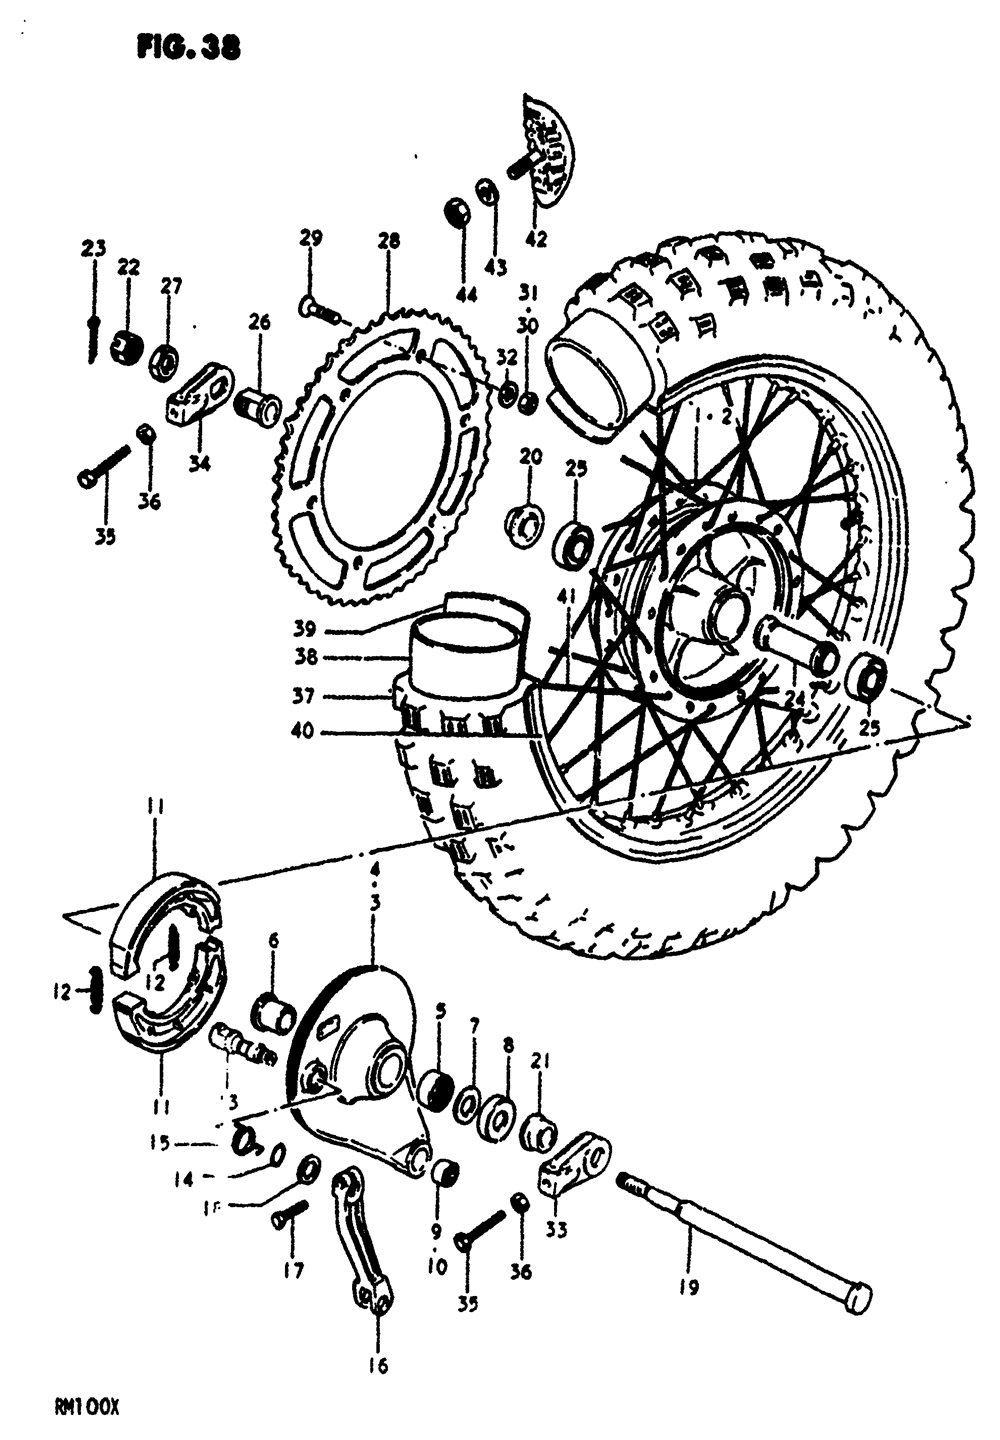 Rear wheel (rm100n